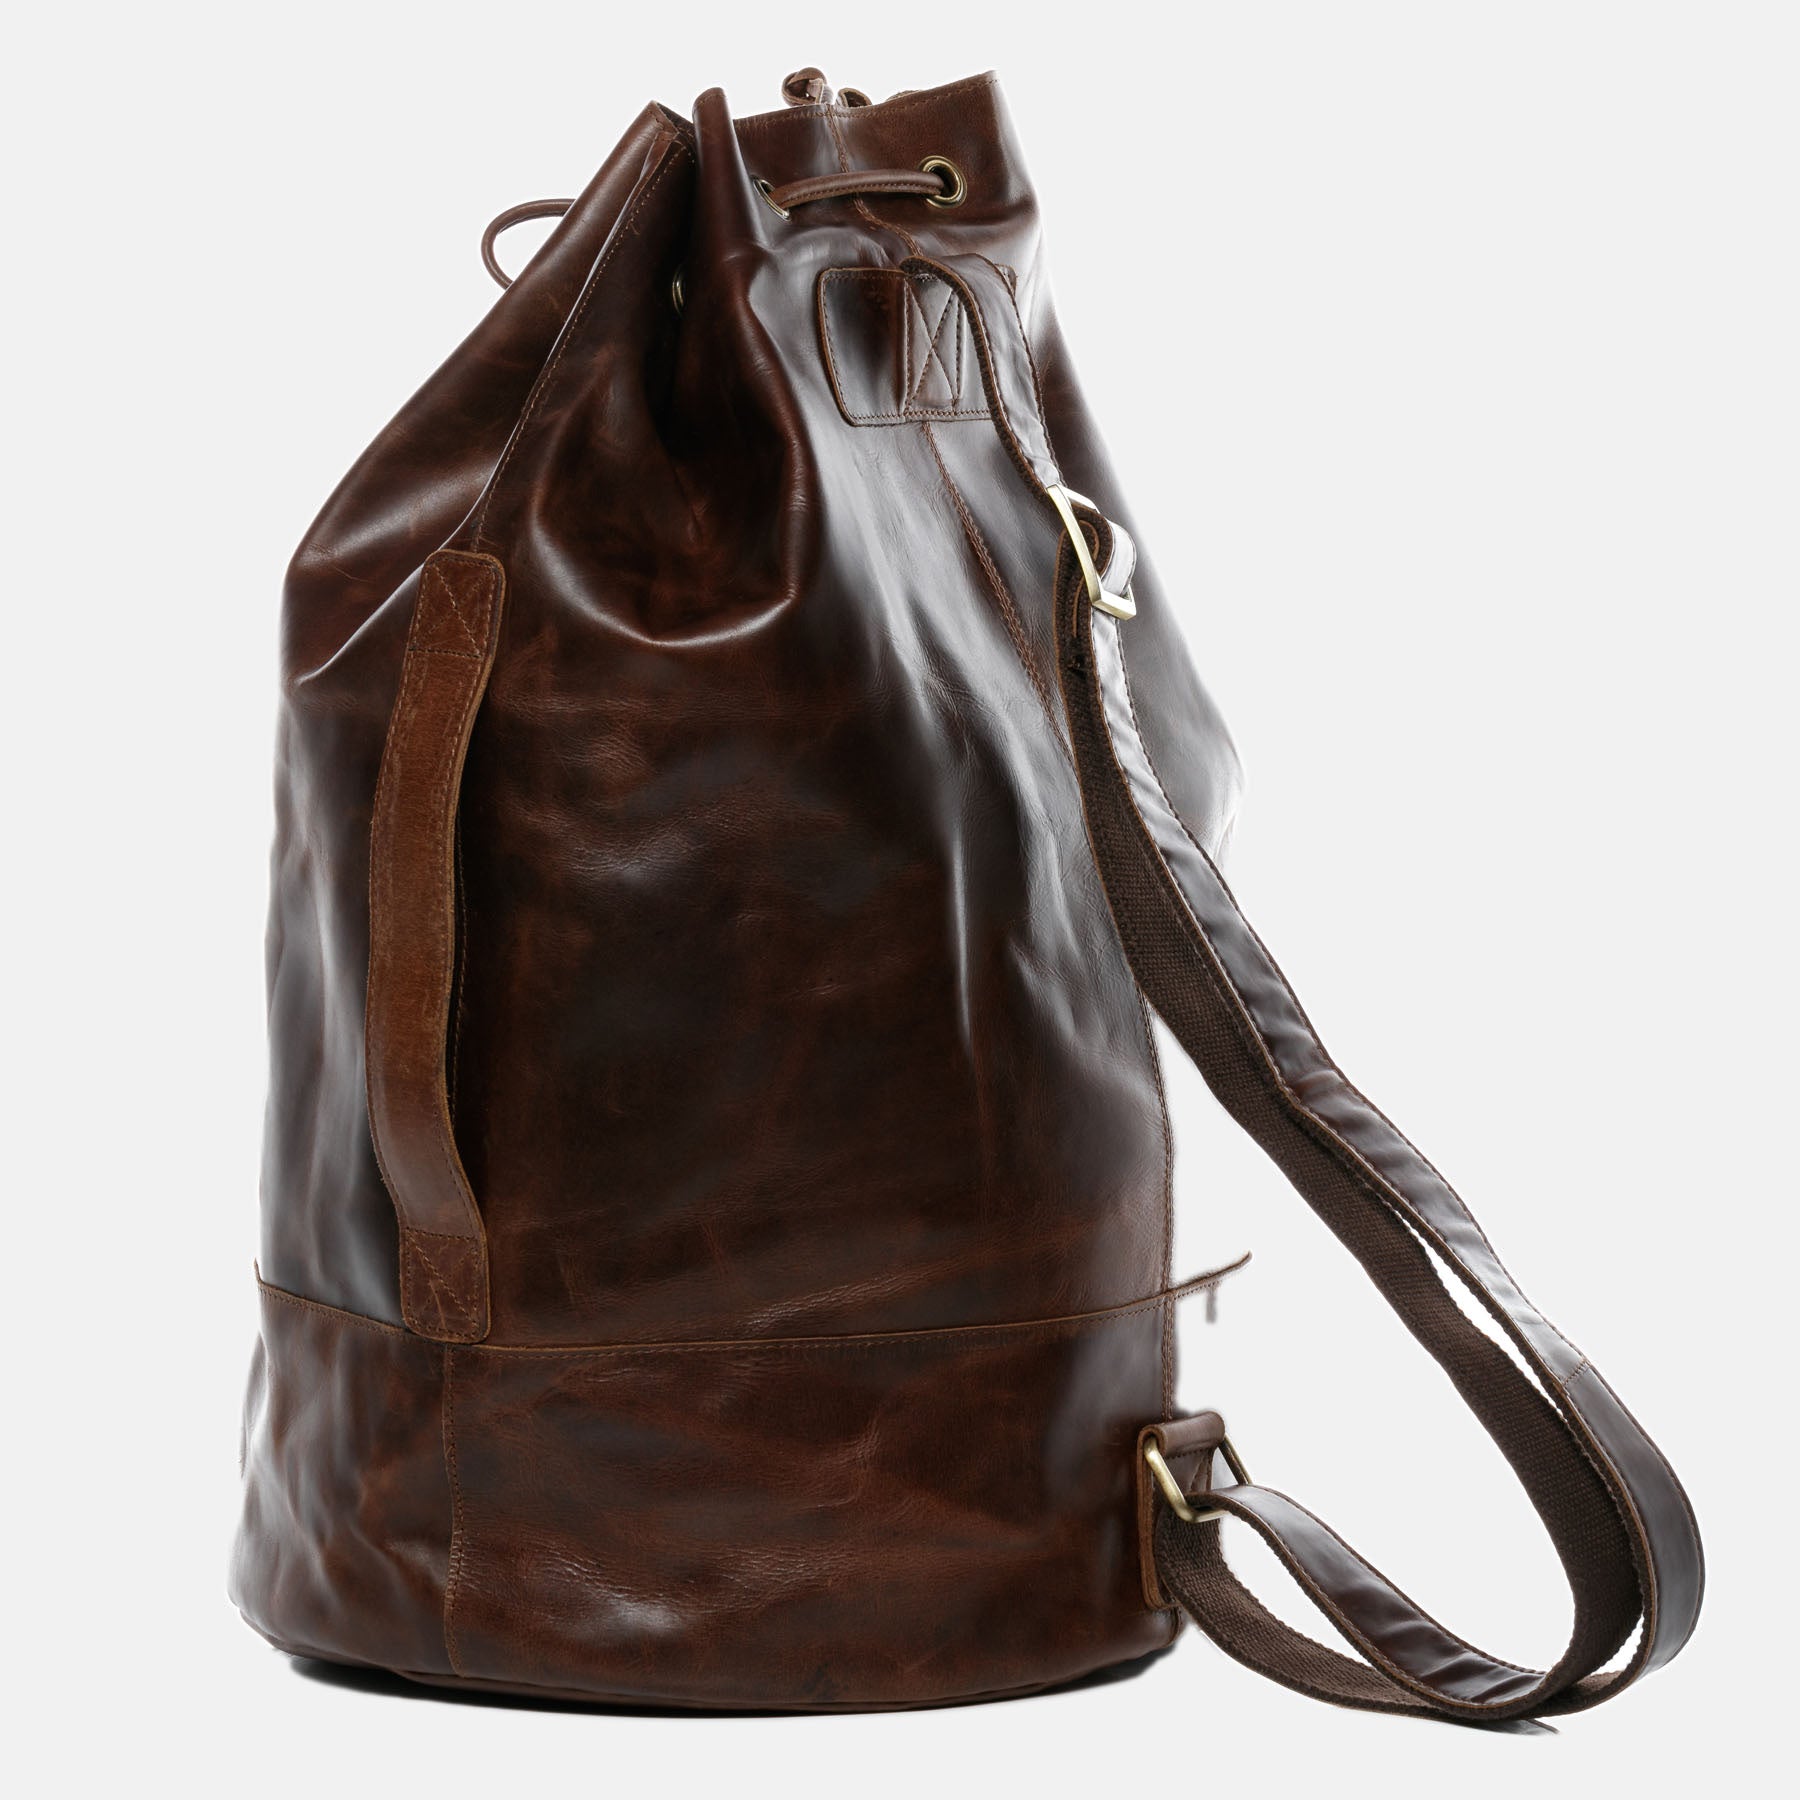 XL Duffel bag HEATHROW natural leather brown-cognac